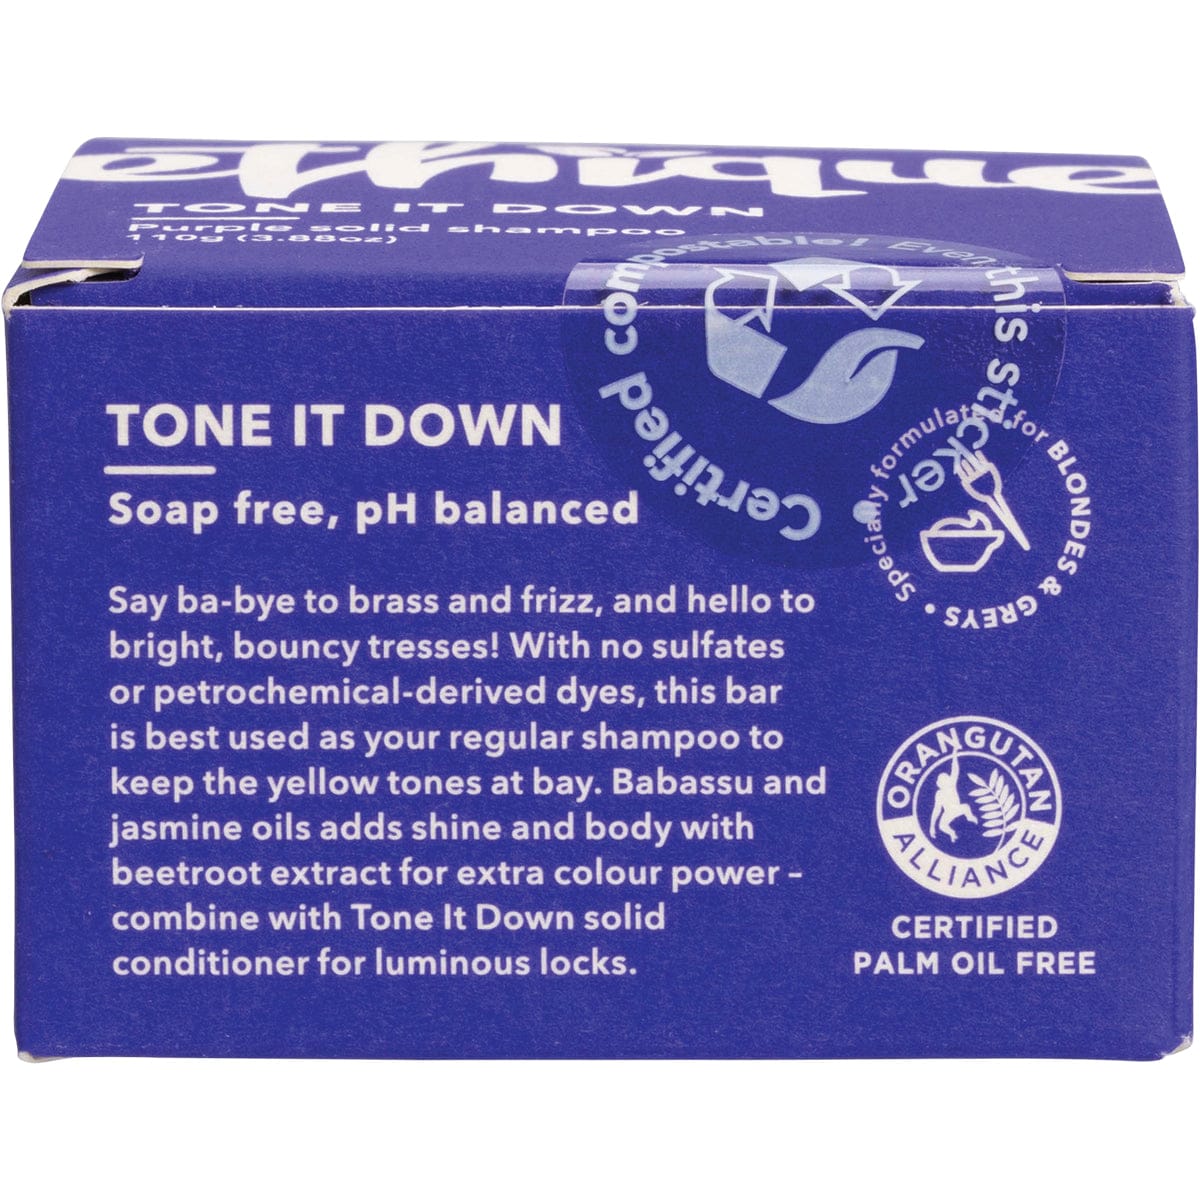 Ethique Solid Shampoo Bar Tone It Down Purple 110g